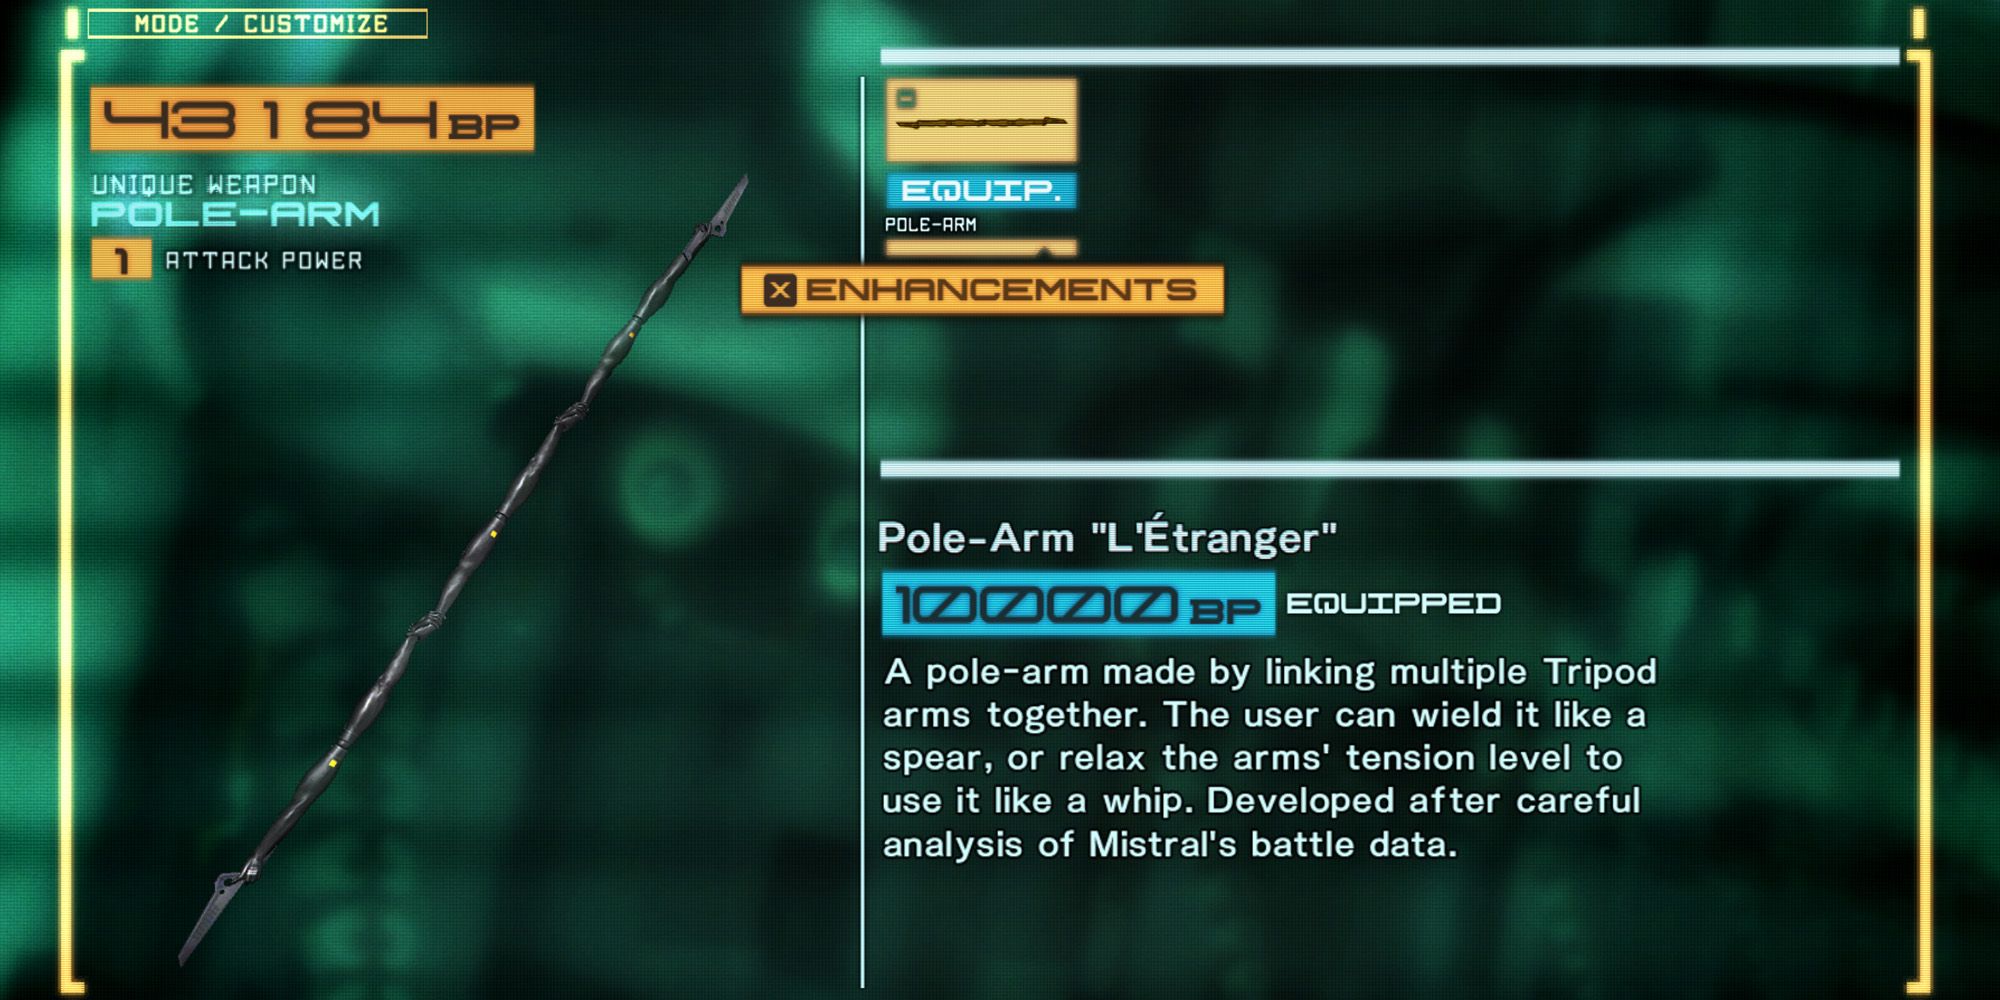 Metal Gear Rising: Revengeance screenshot of the Pole-Arm (L'Étranger) Unique Weapon in the Customize menu